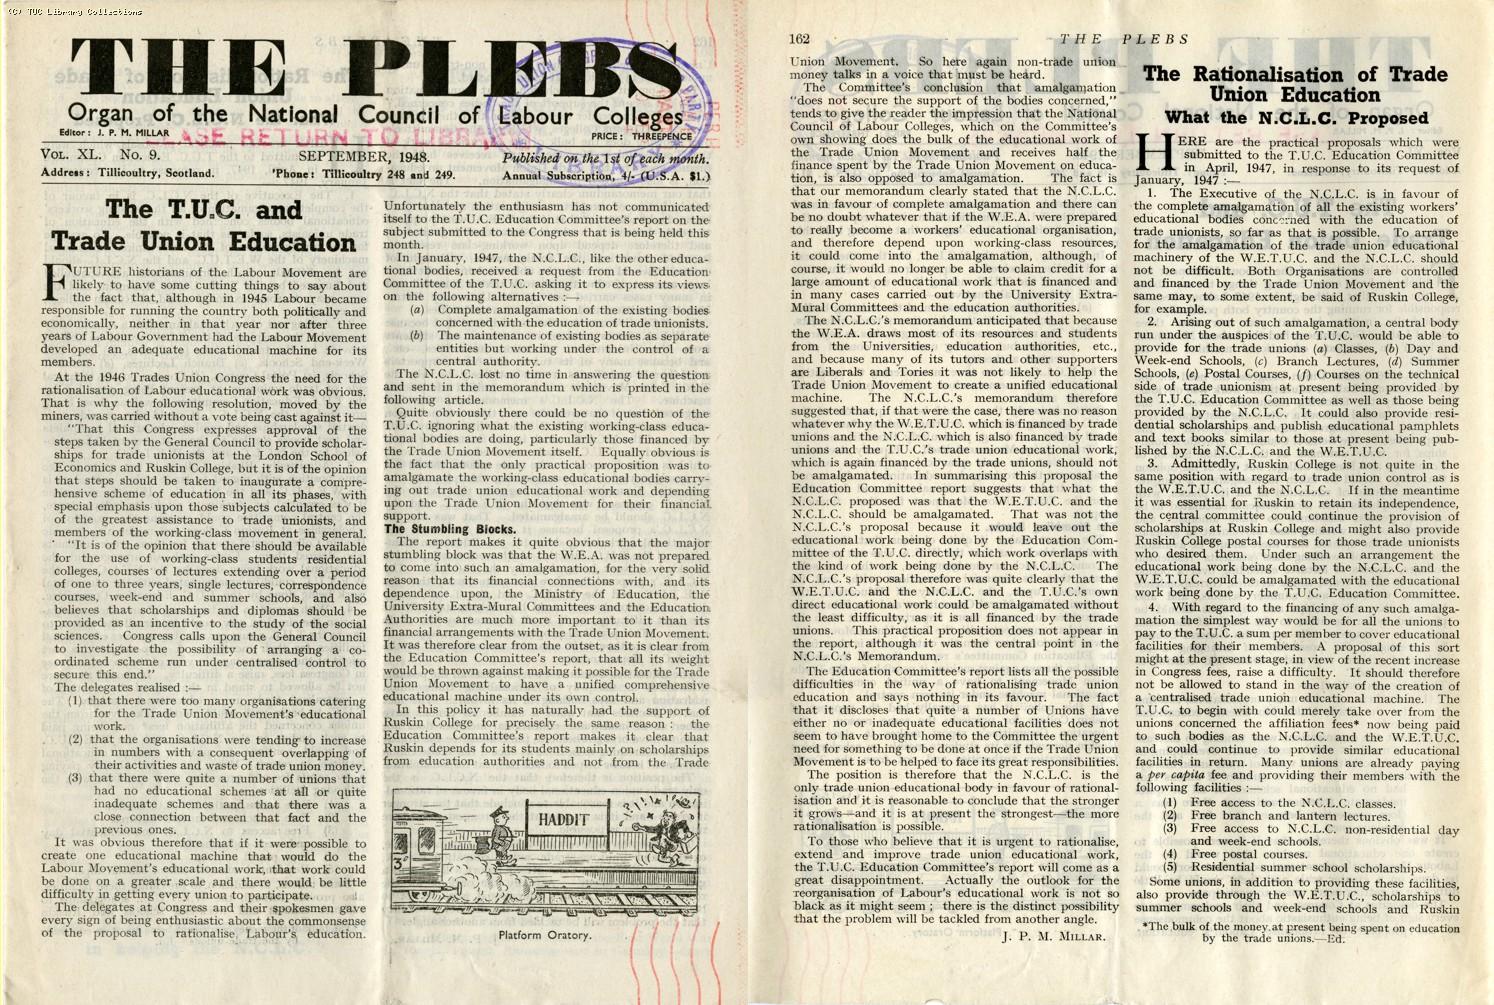 The Plebs, 1948